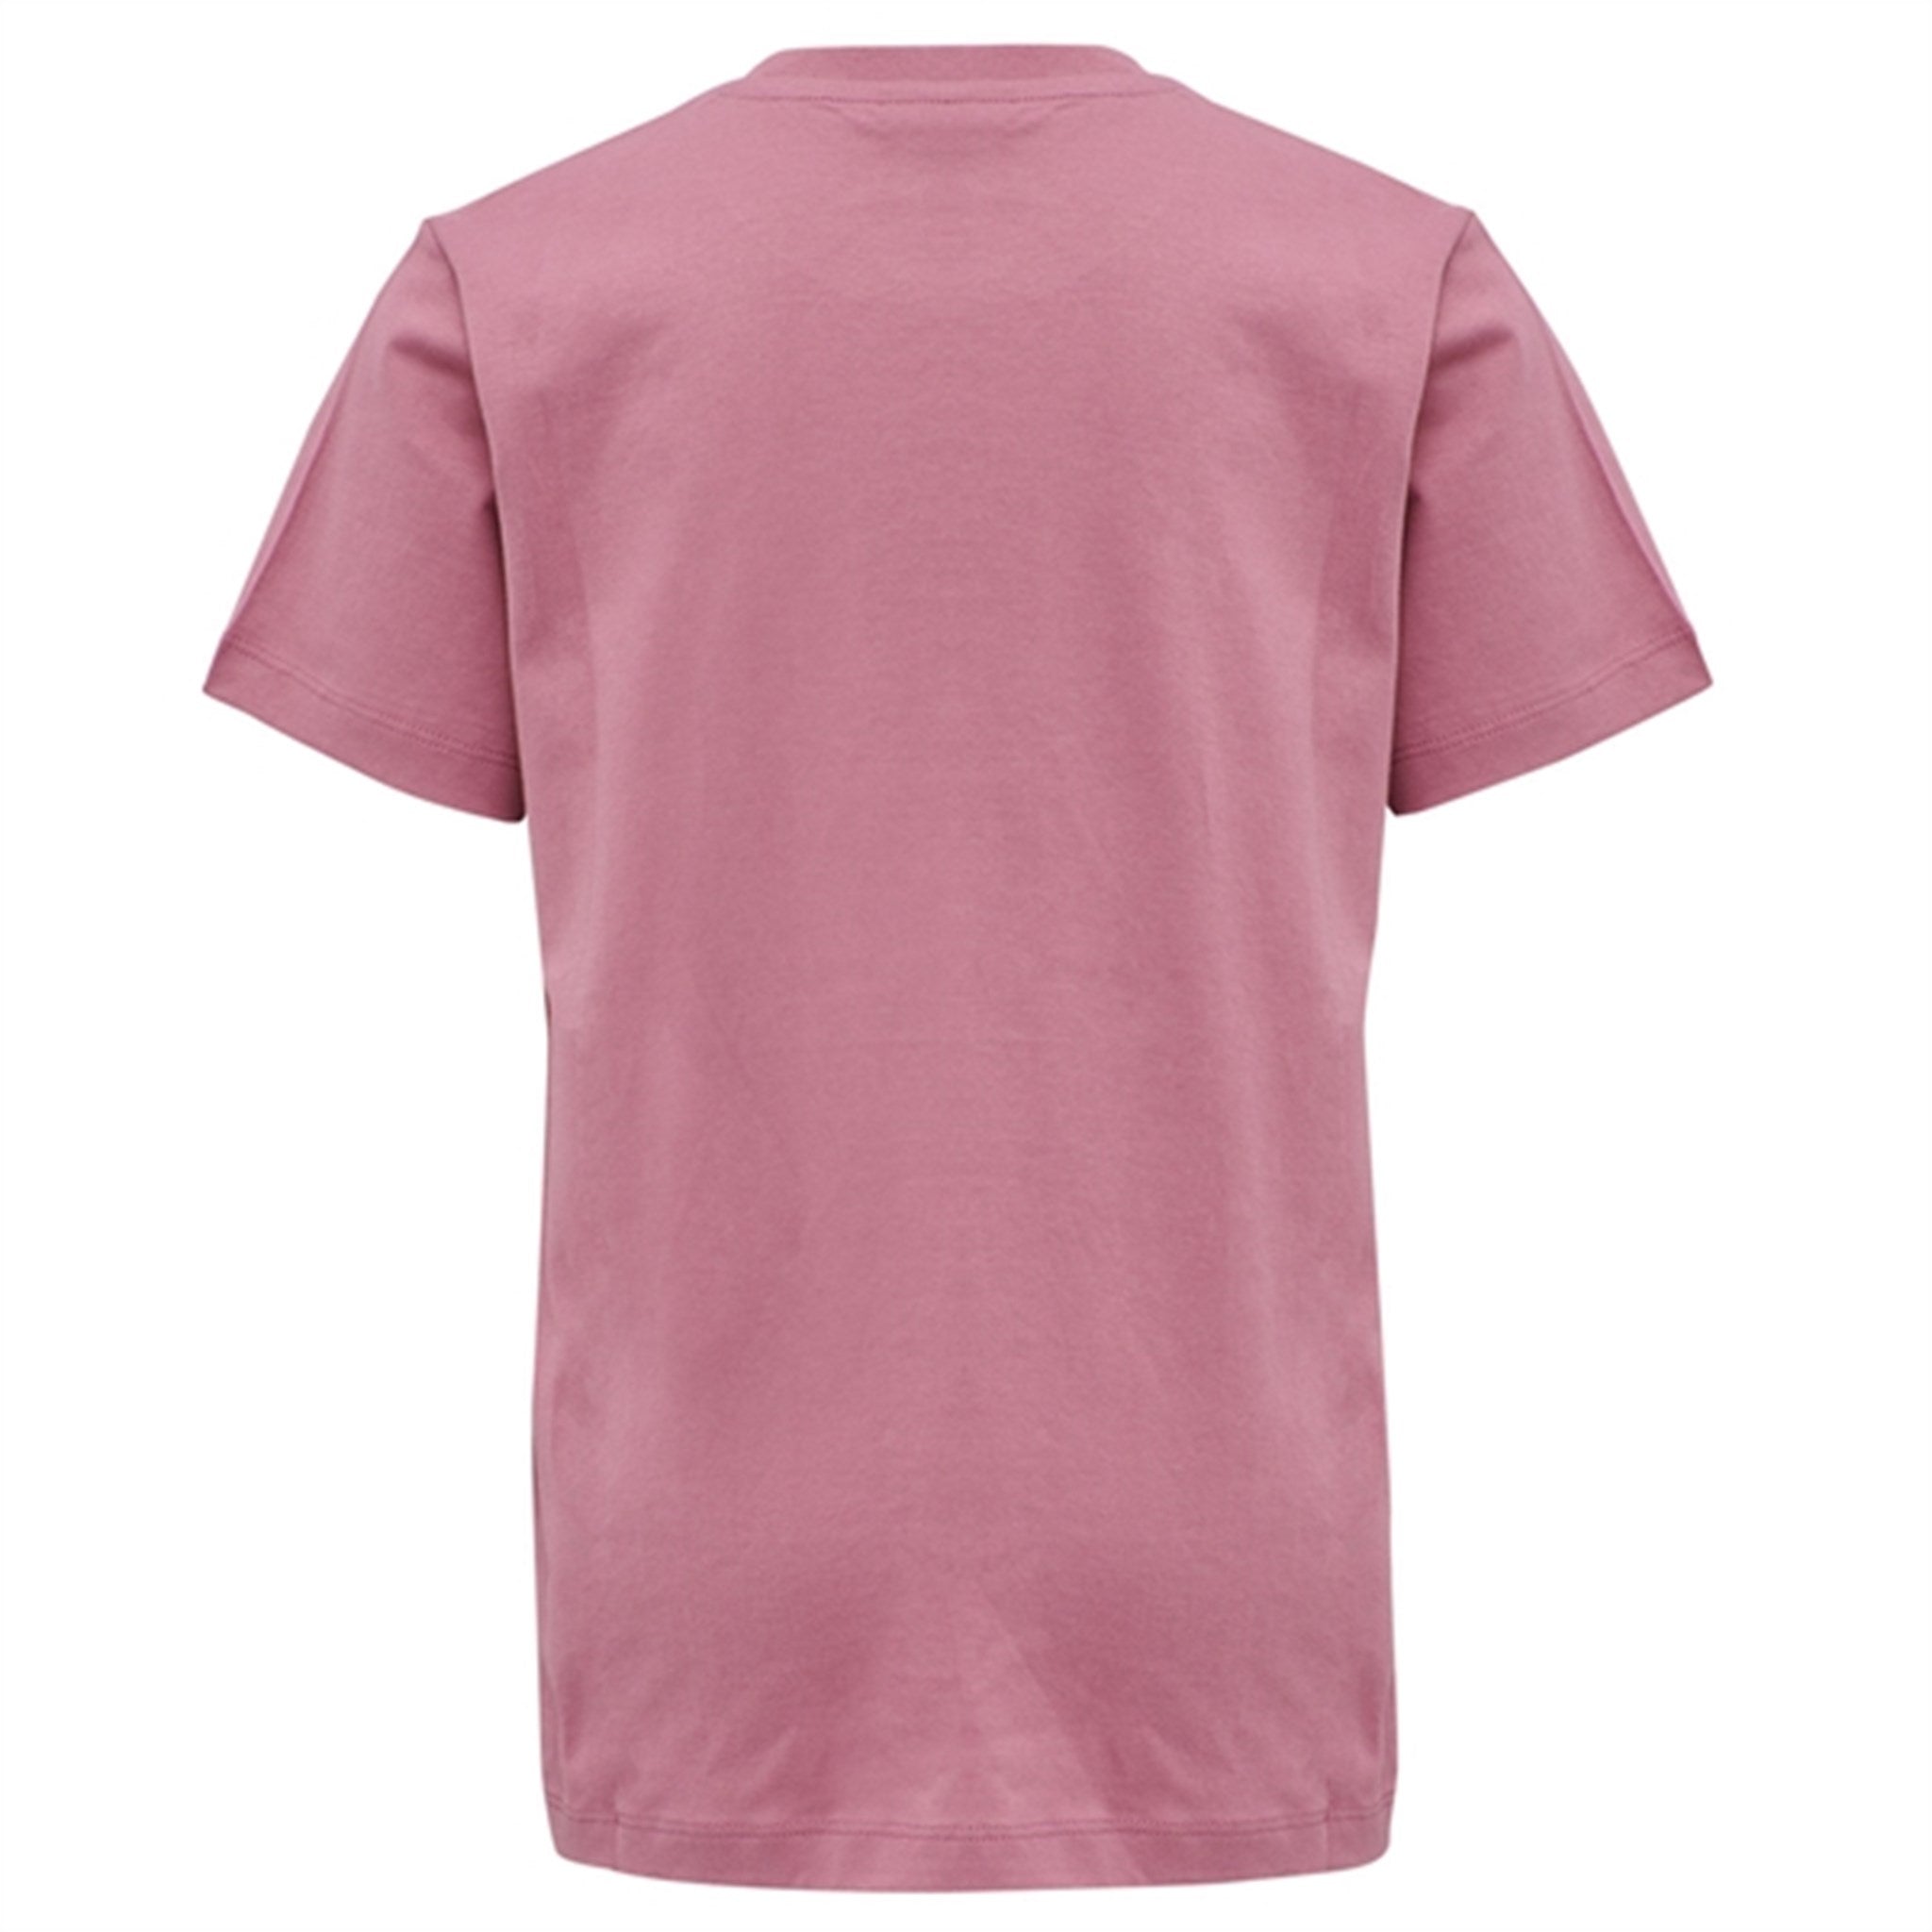 Hummel Heather Rose Tres T-Shirt S/S 4